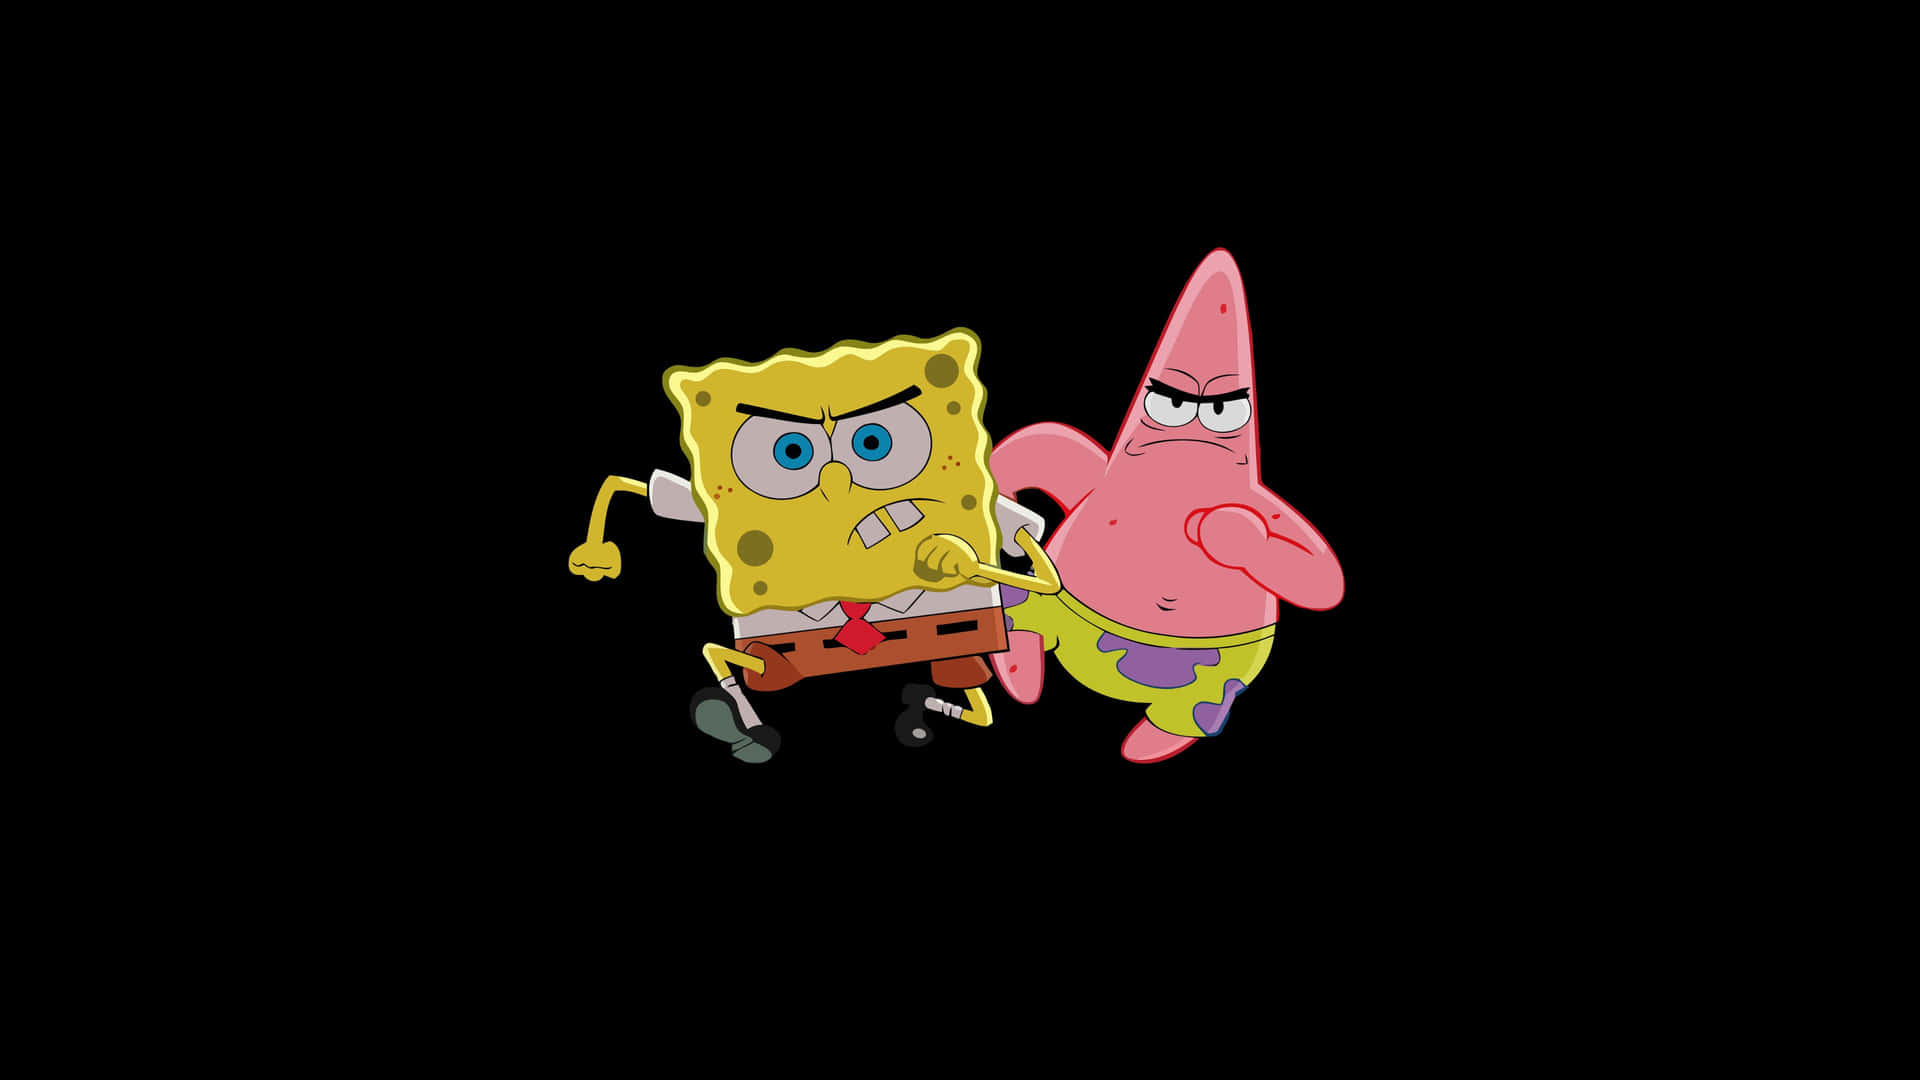 Schaudir Diese Geliebten Charaktere Aus Spongebob Schwammkopf An! Wallpaper